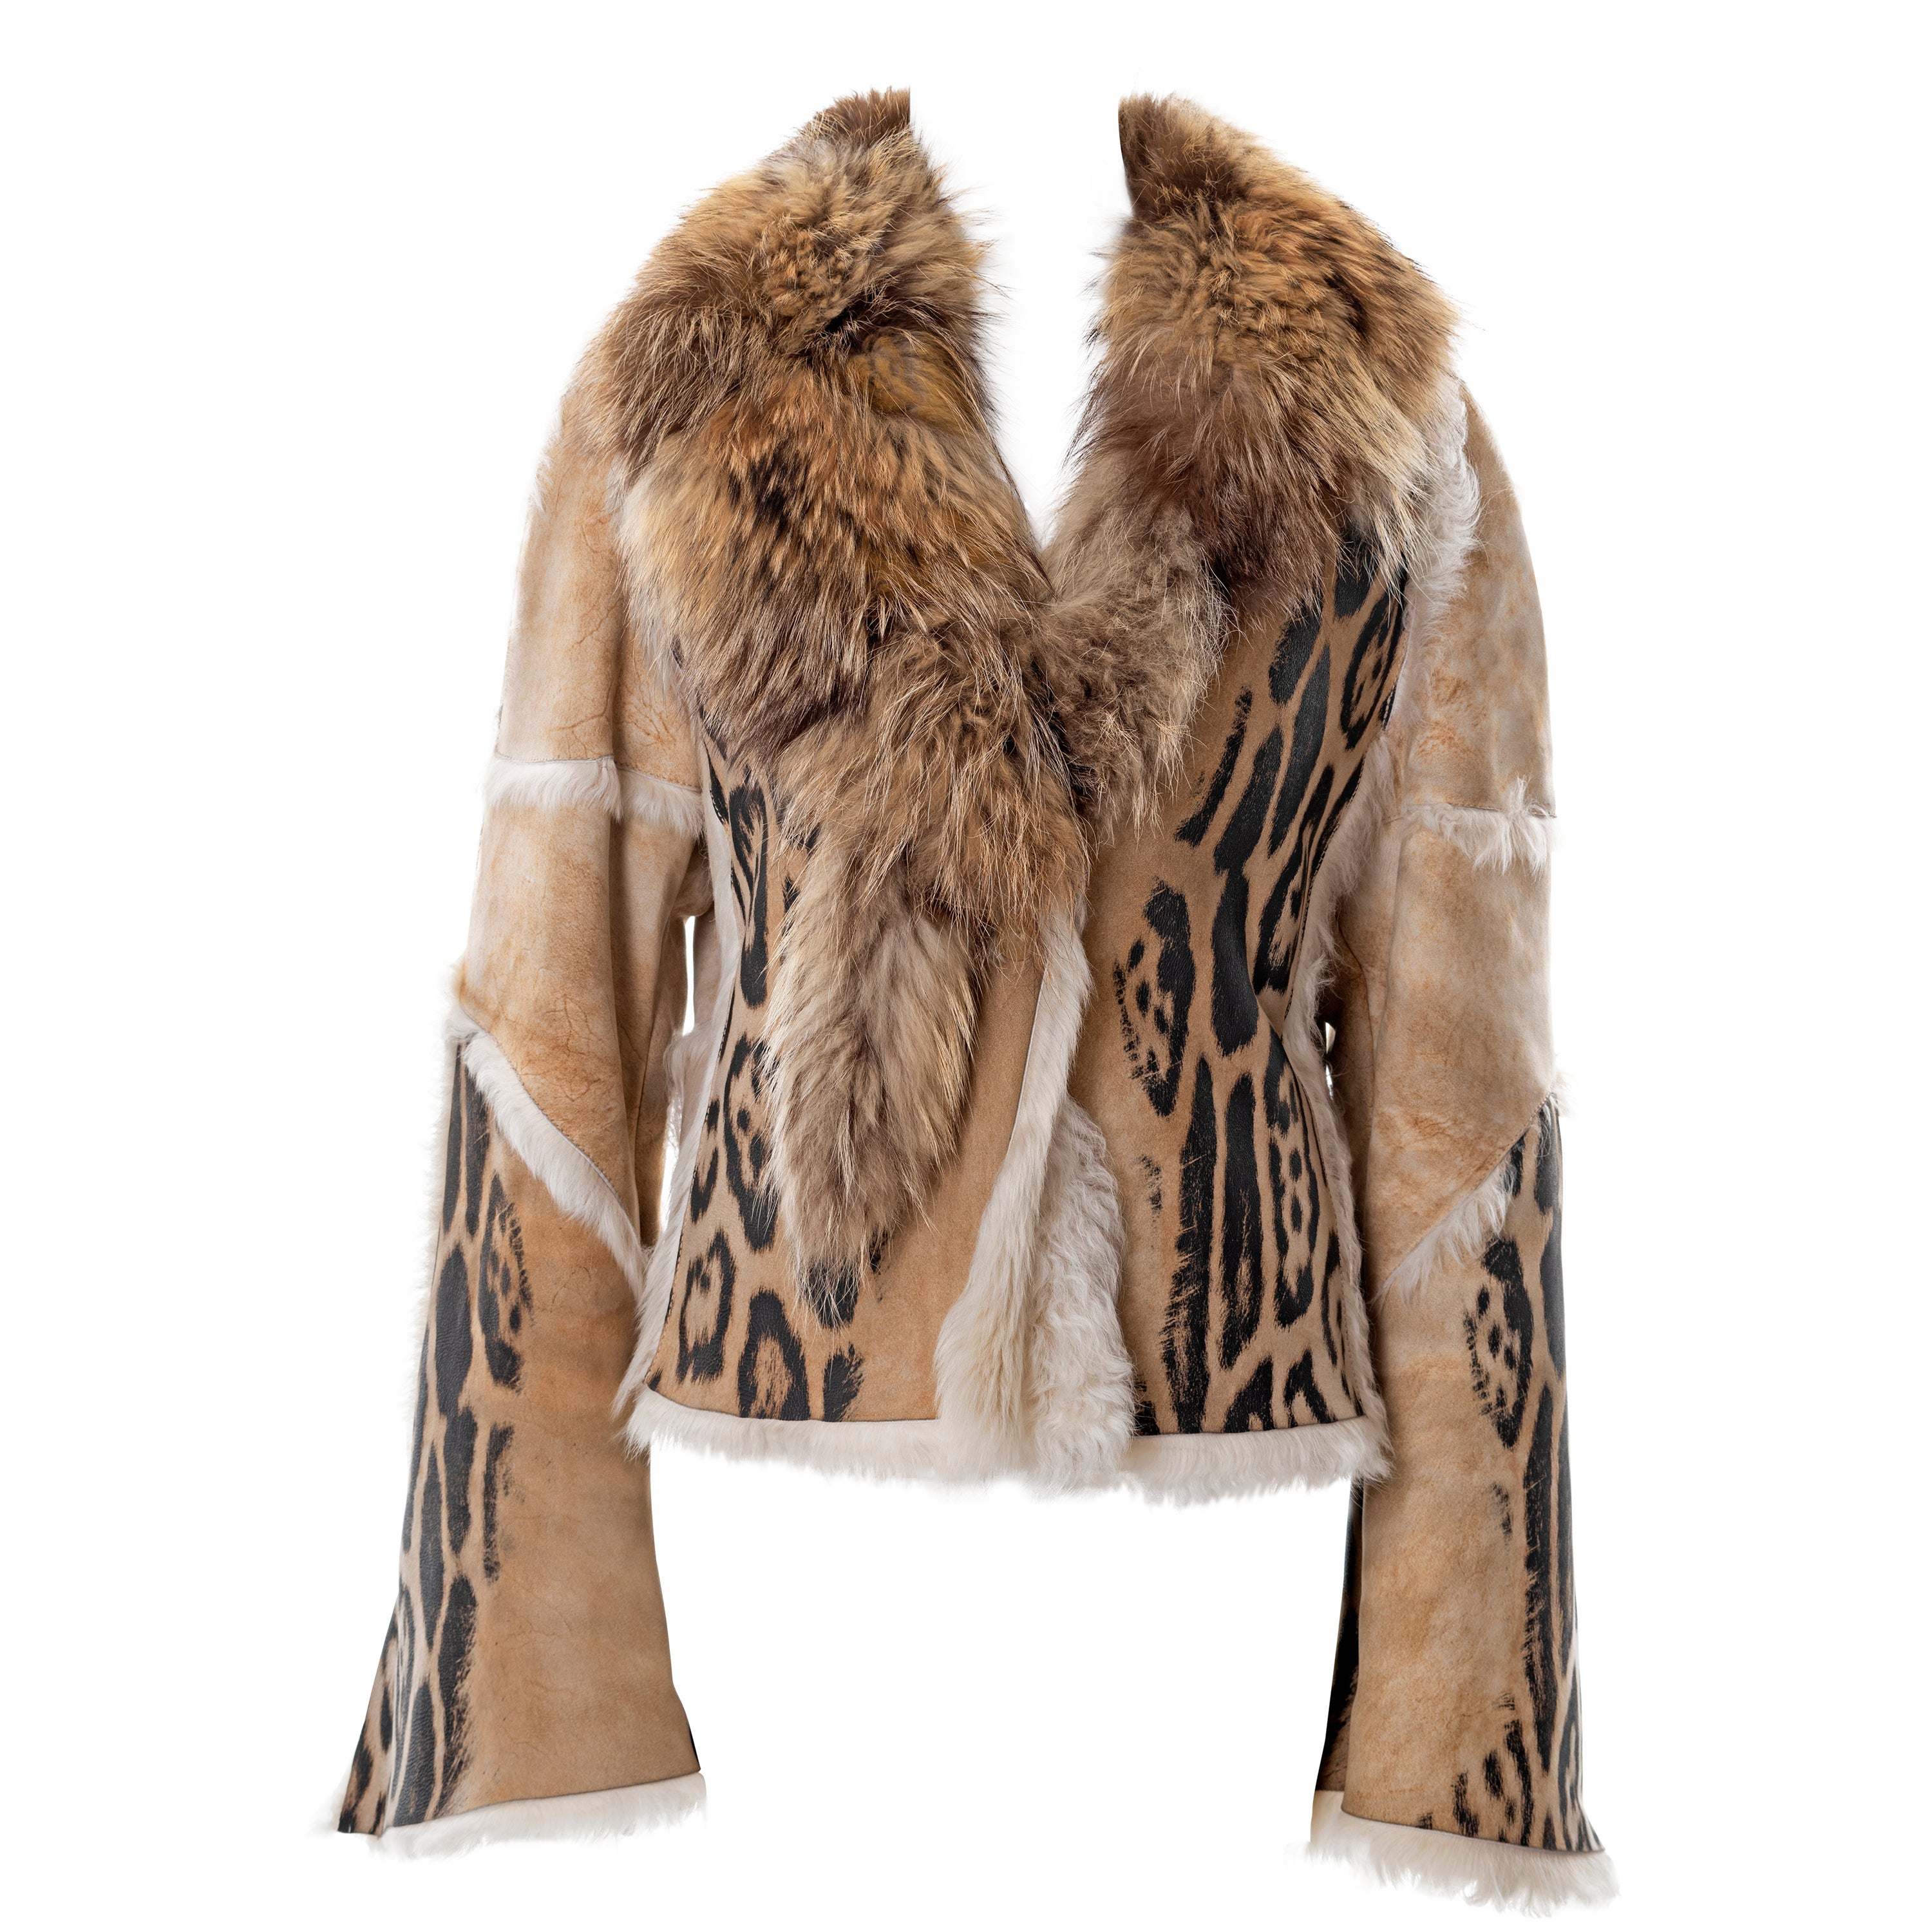 Roberto Cavalli leopard print sheepskin jacket with fox fur collar, fw 2001